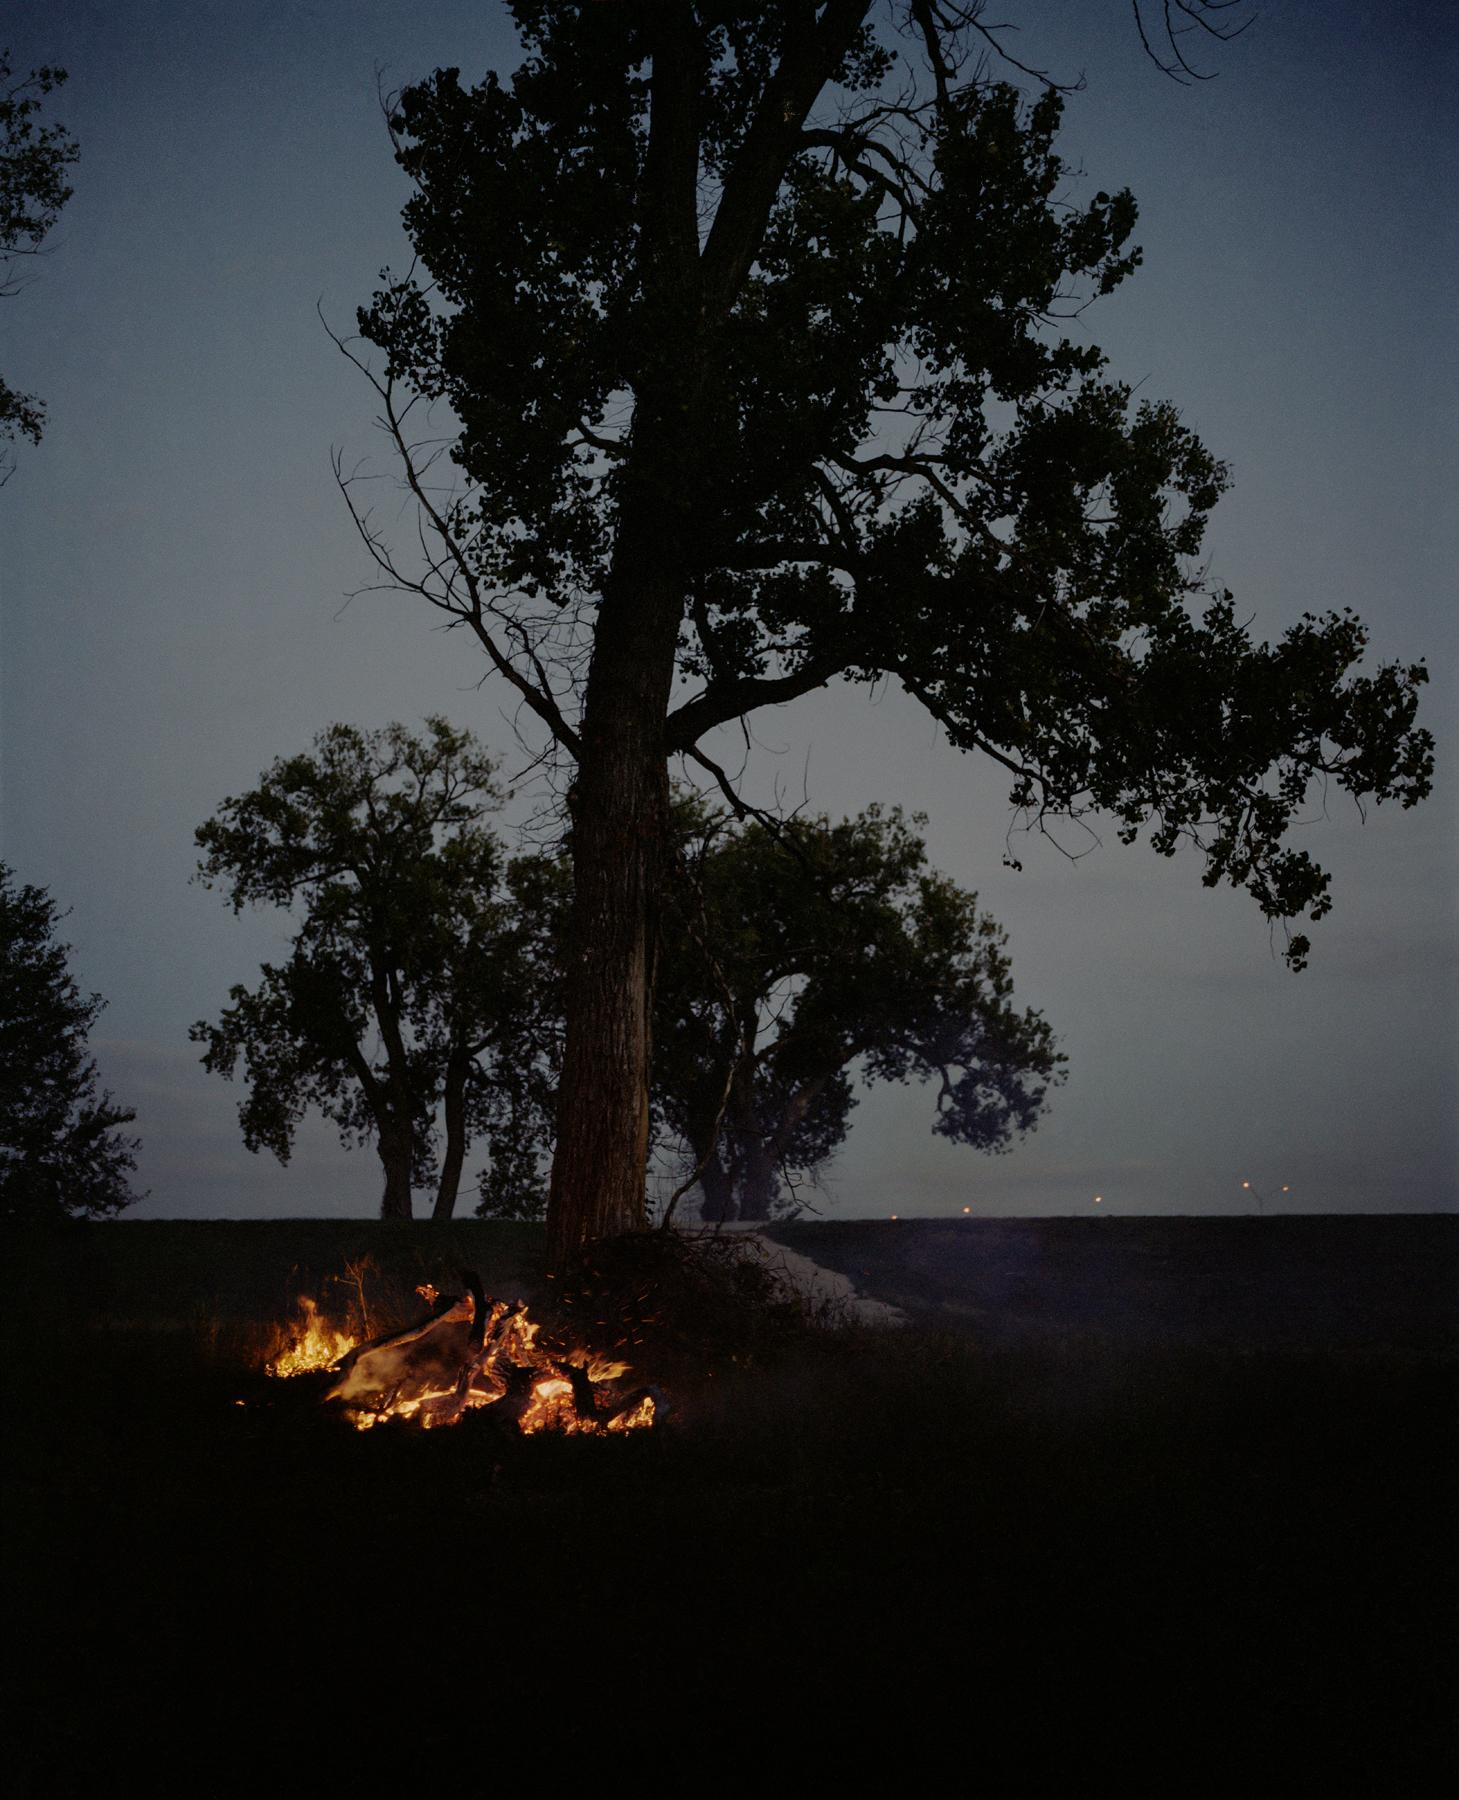 Gregory Halpern Color Photograph - Omaha Sketchbook: Fire and Tree, Omaha, NE - Contemporary Photography